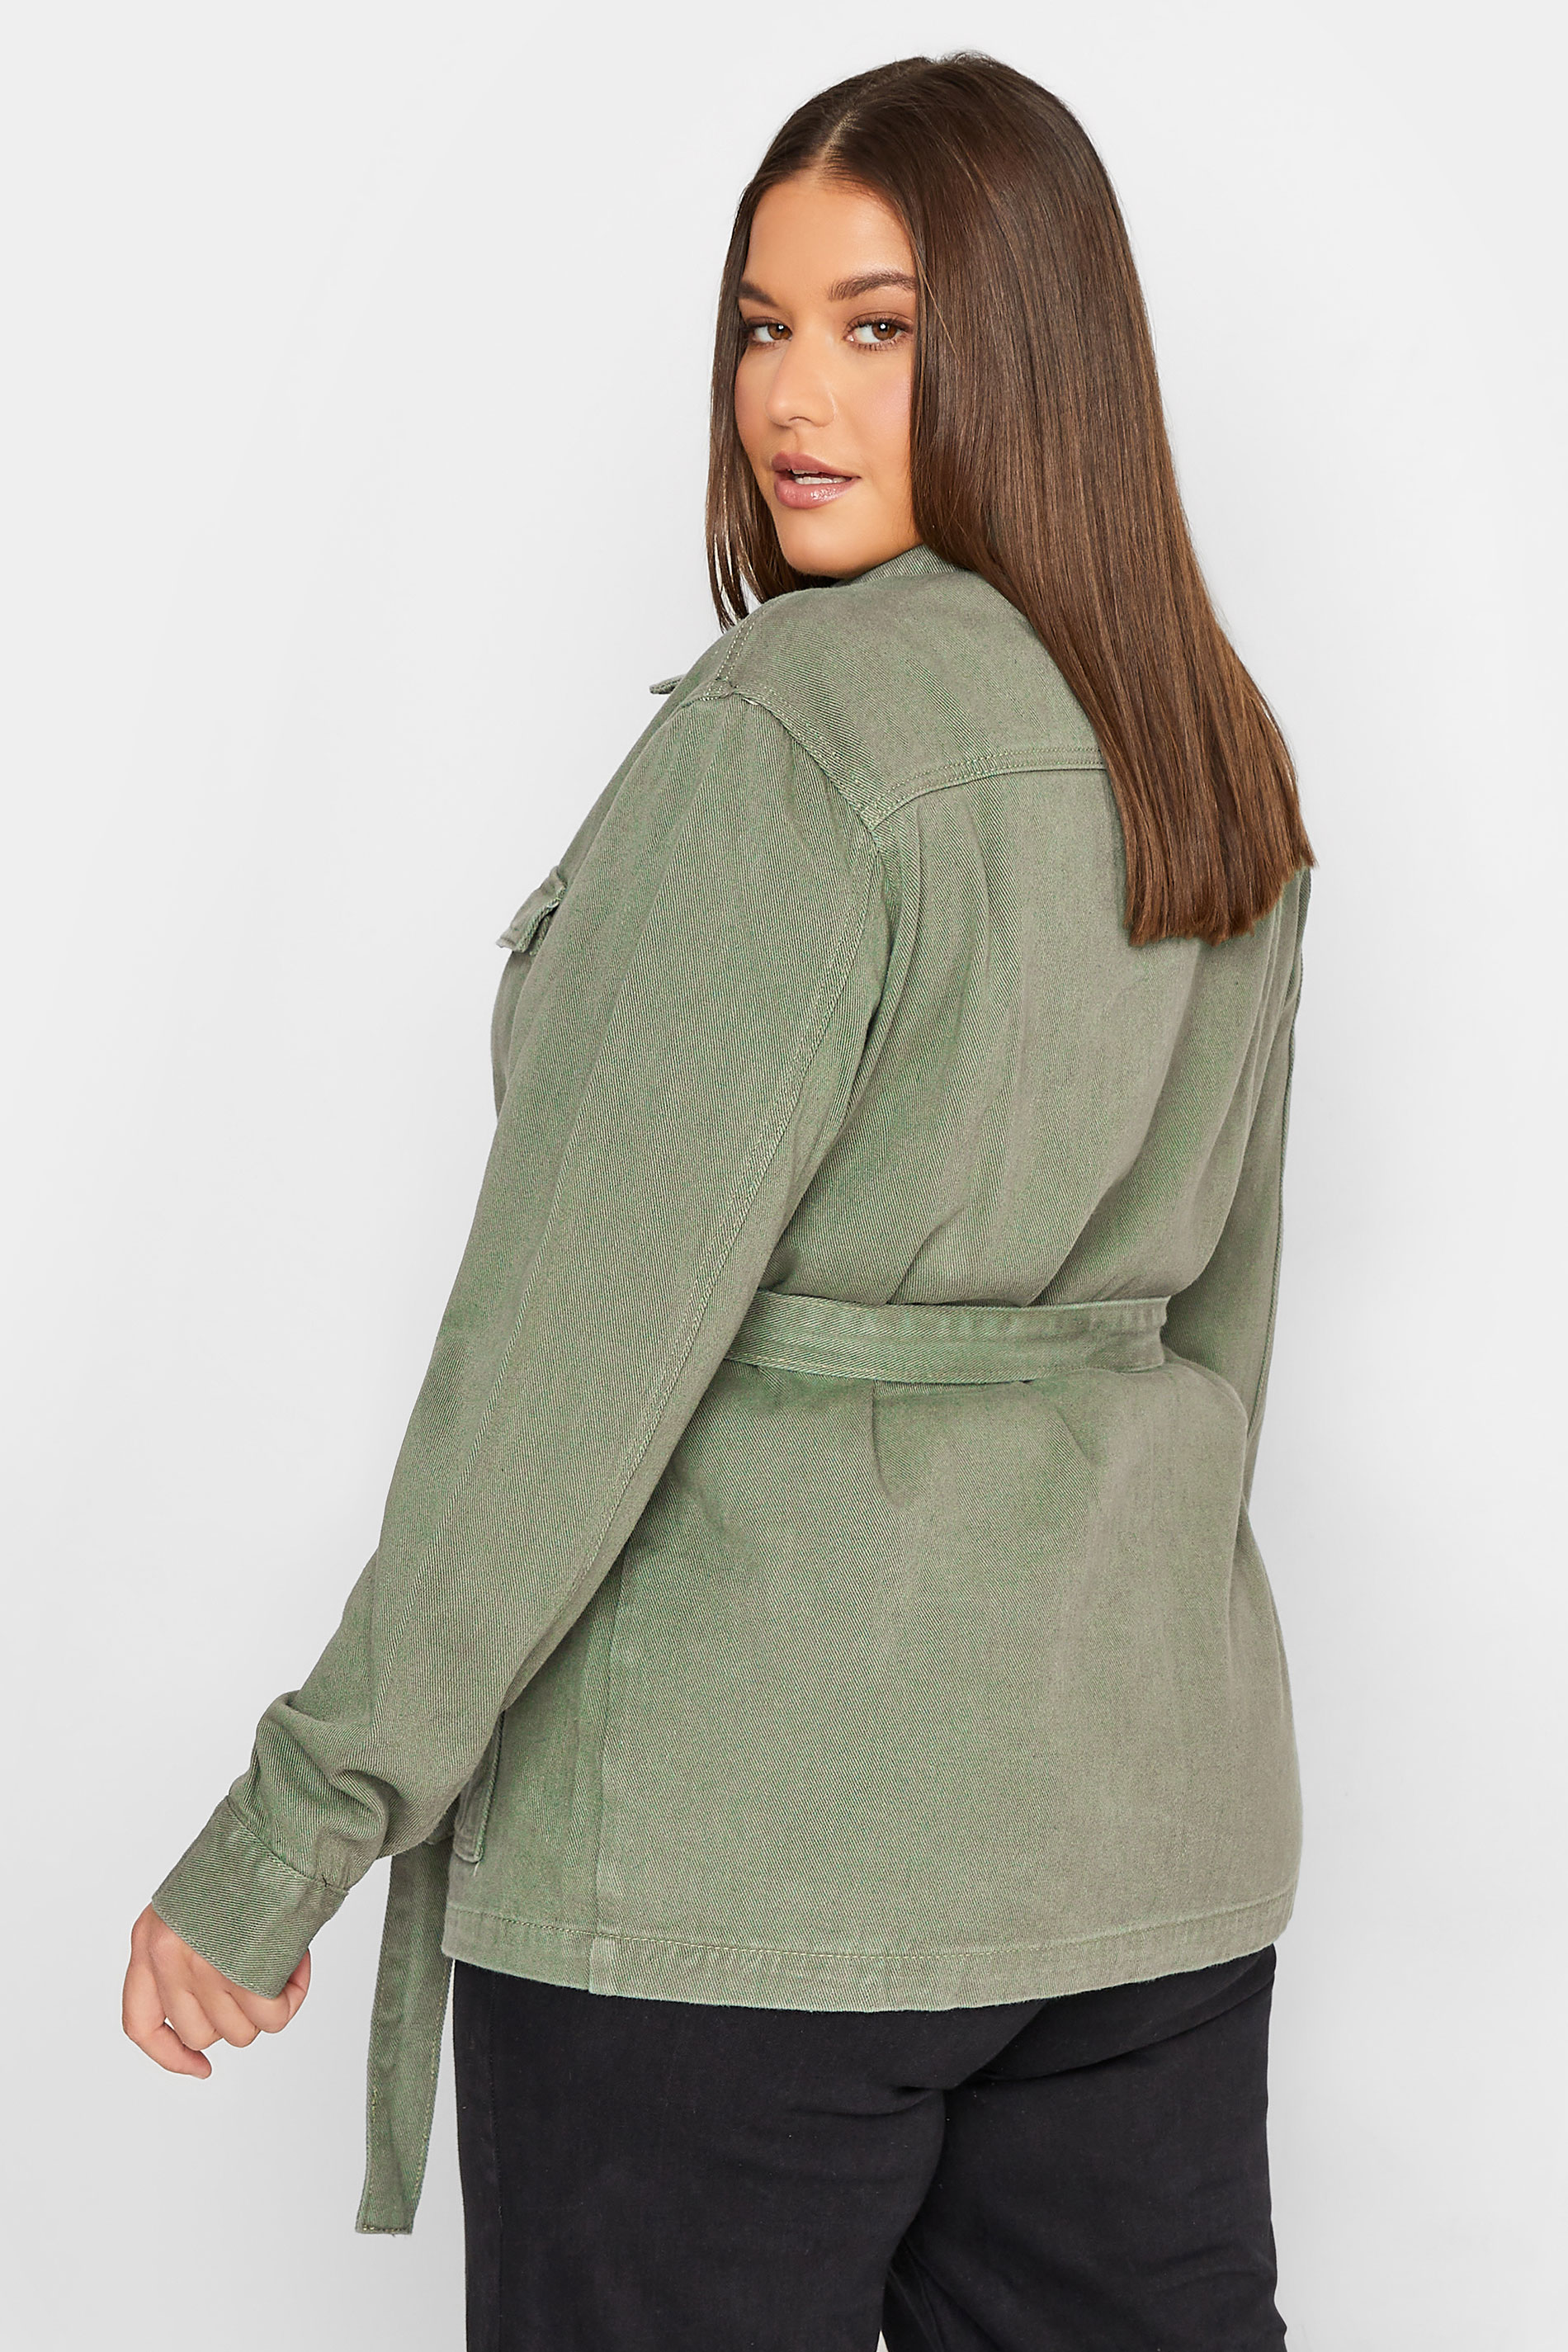 Tall Women's LTS Khaki Green Belted Twill Jacket | Long Tall Sally  3